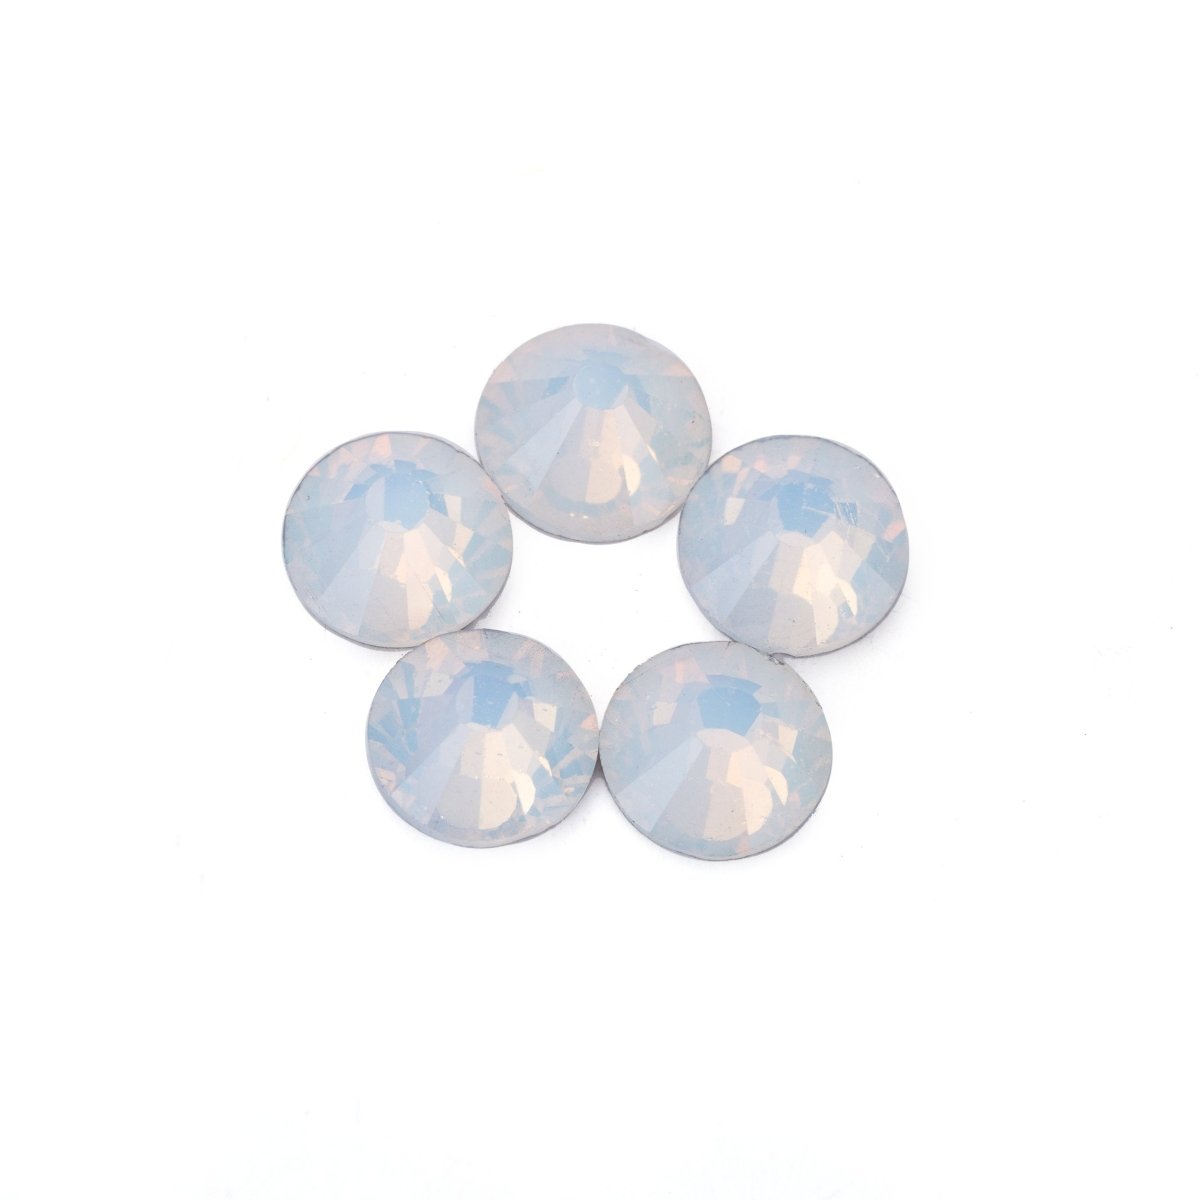 1440 pcs High Quality Crystal Cream White Opal Rhinestones Loose Crystal flatback No Hot Fix glass bead Size ss 10 / ss 12 / ss 16 / ss 20, SS10-OPAL - DLUXCA